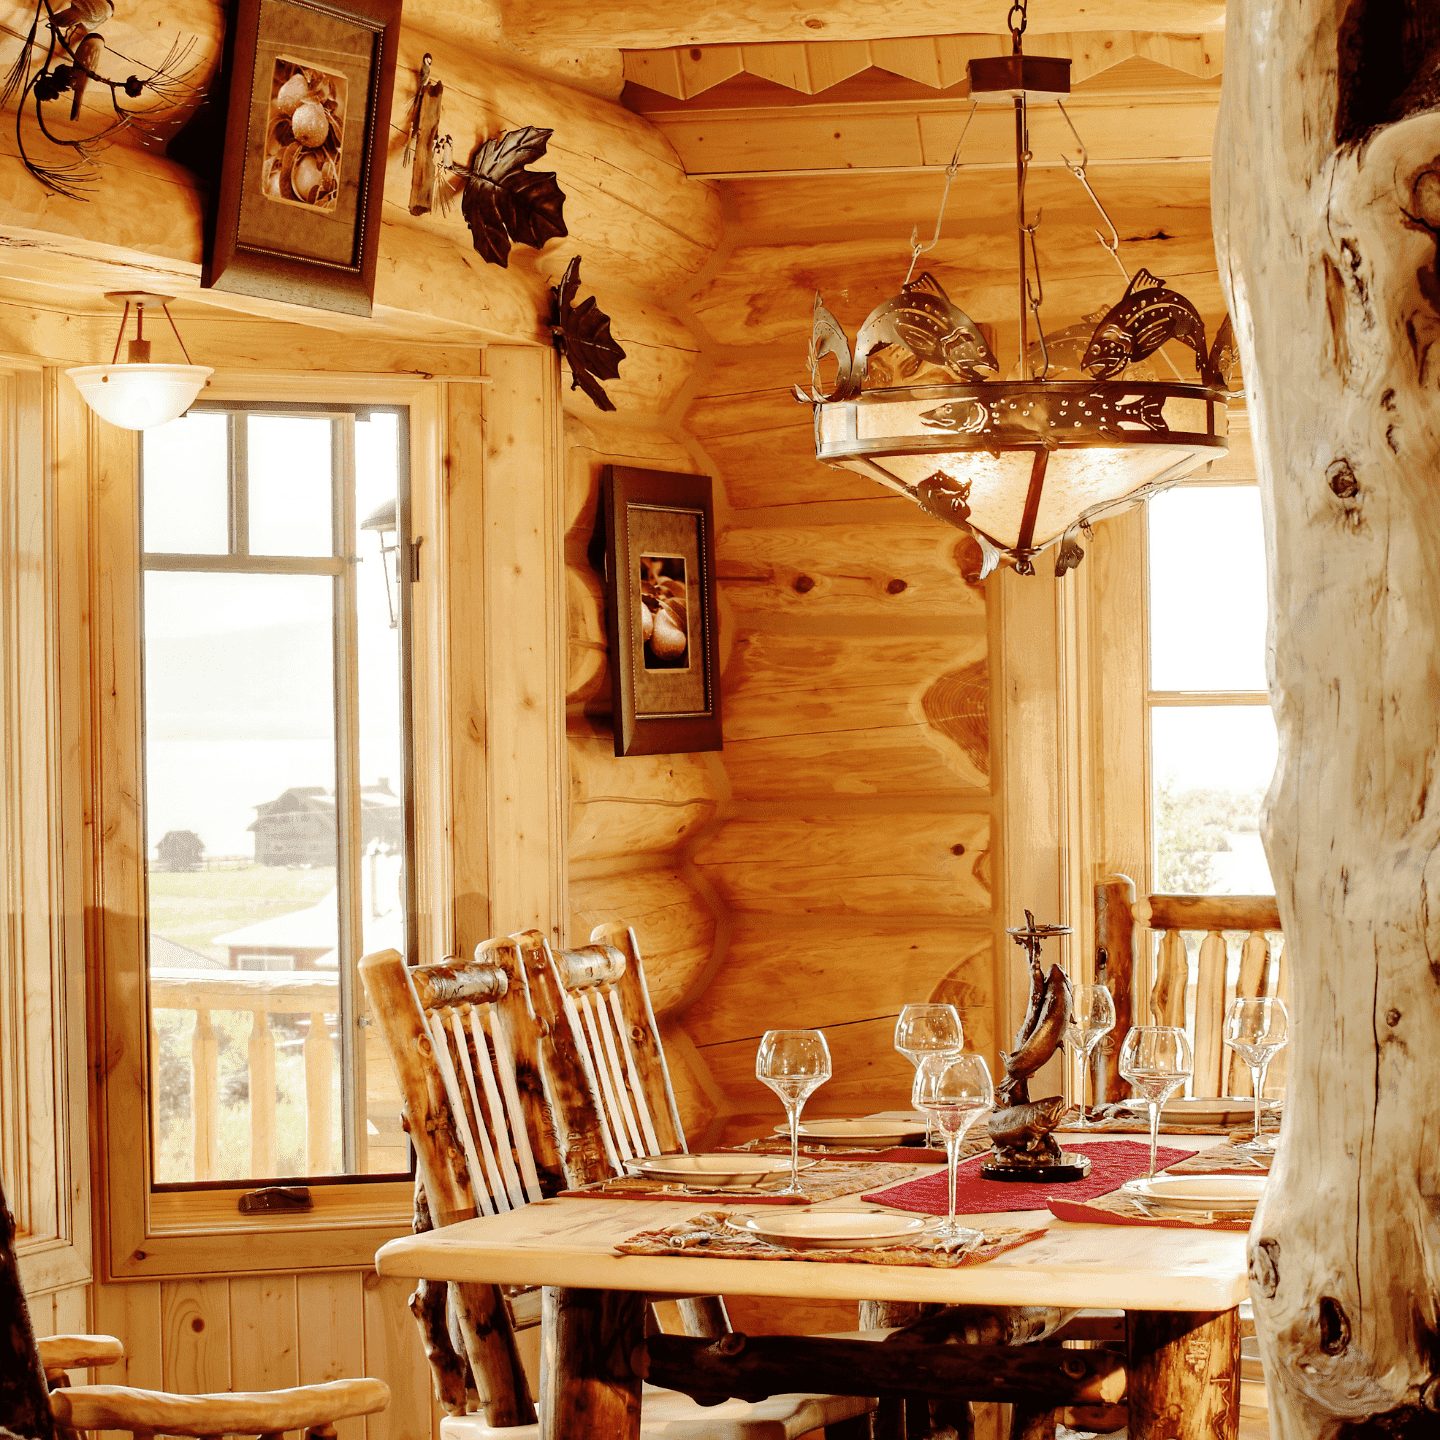 Elk Engraved Wood Coaster Set - Housewarming, Birthday, Christmas Gift -  Cabin